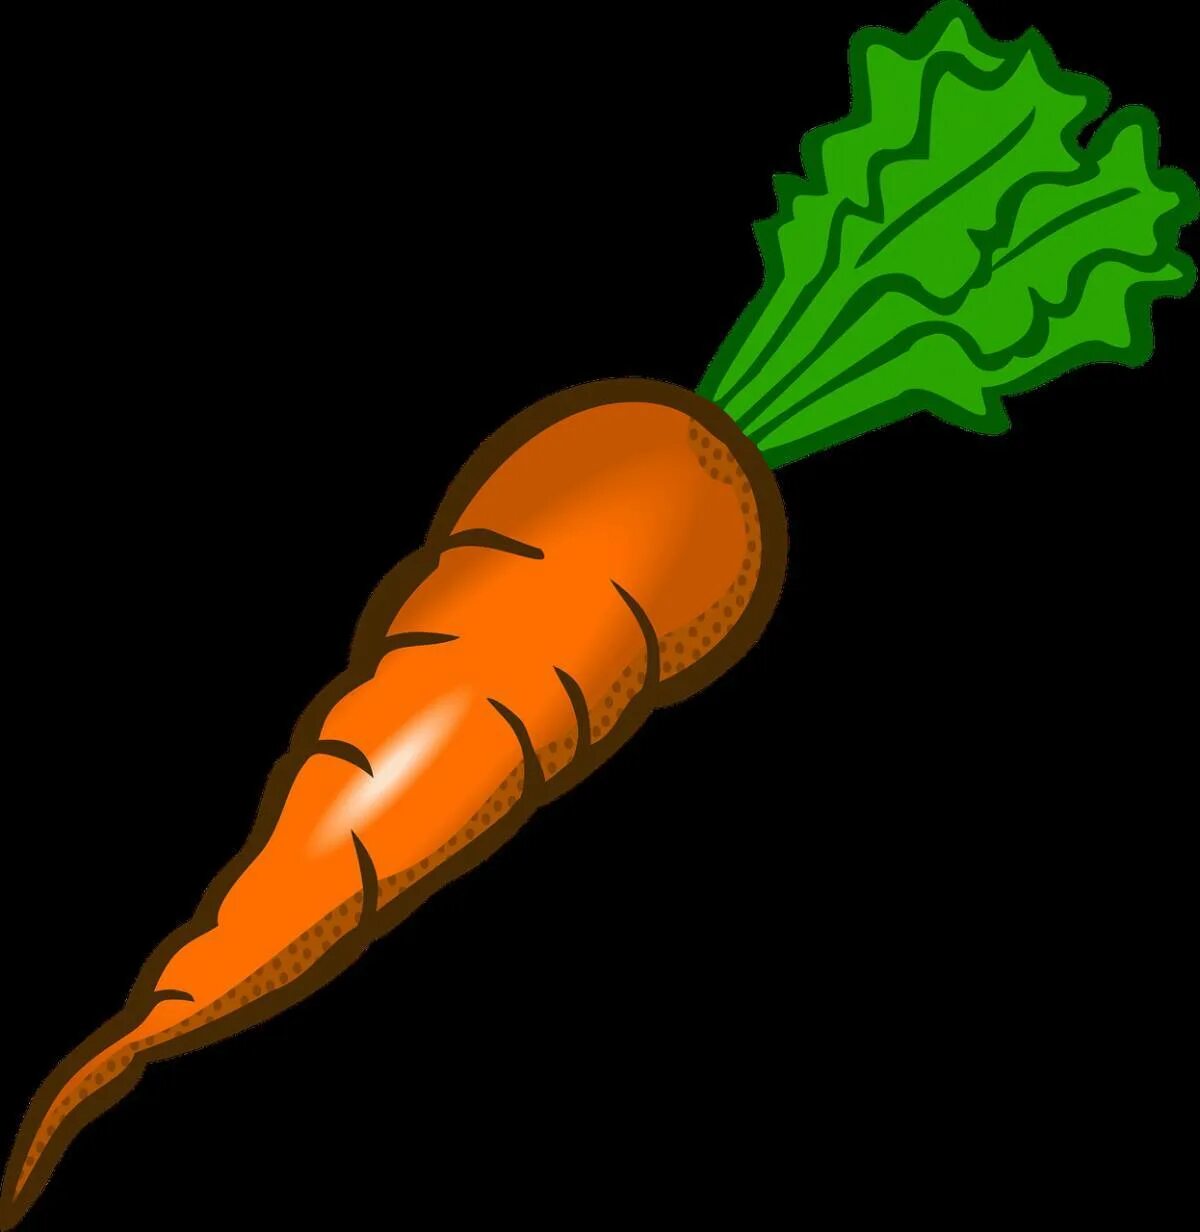 Включи морковочка. Морковка. Морковка на черном фоне. Морковь 1. Одна морковка.